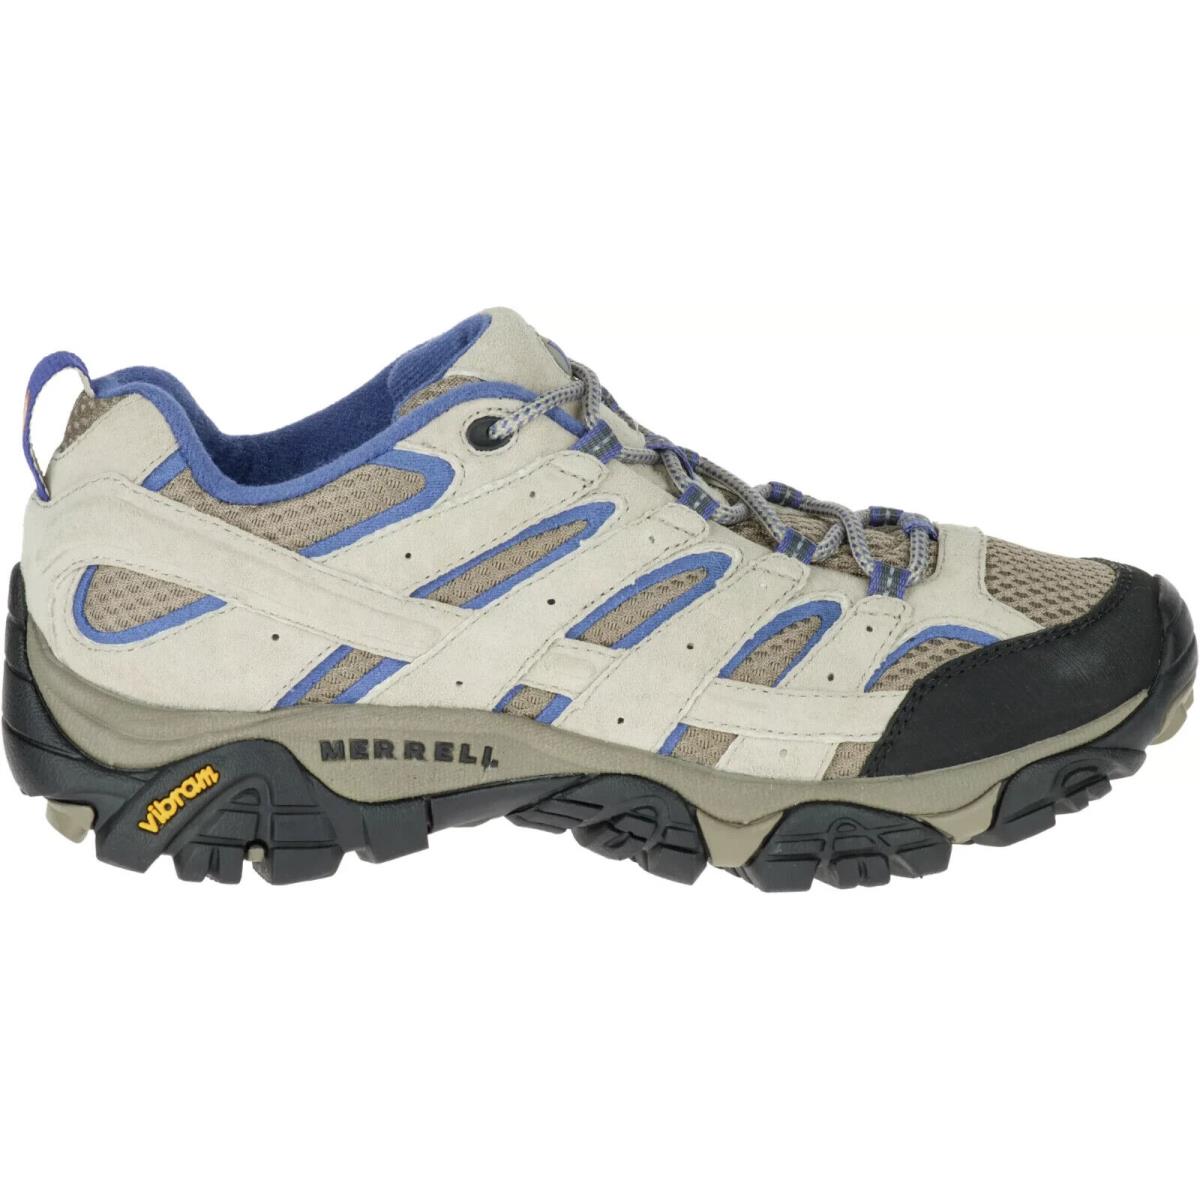 Merrell Women`s Moab 2 Ventilator Hiking Shoes - Size 9 - Aluminum/Marlin